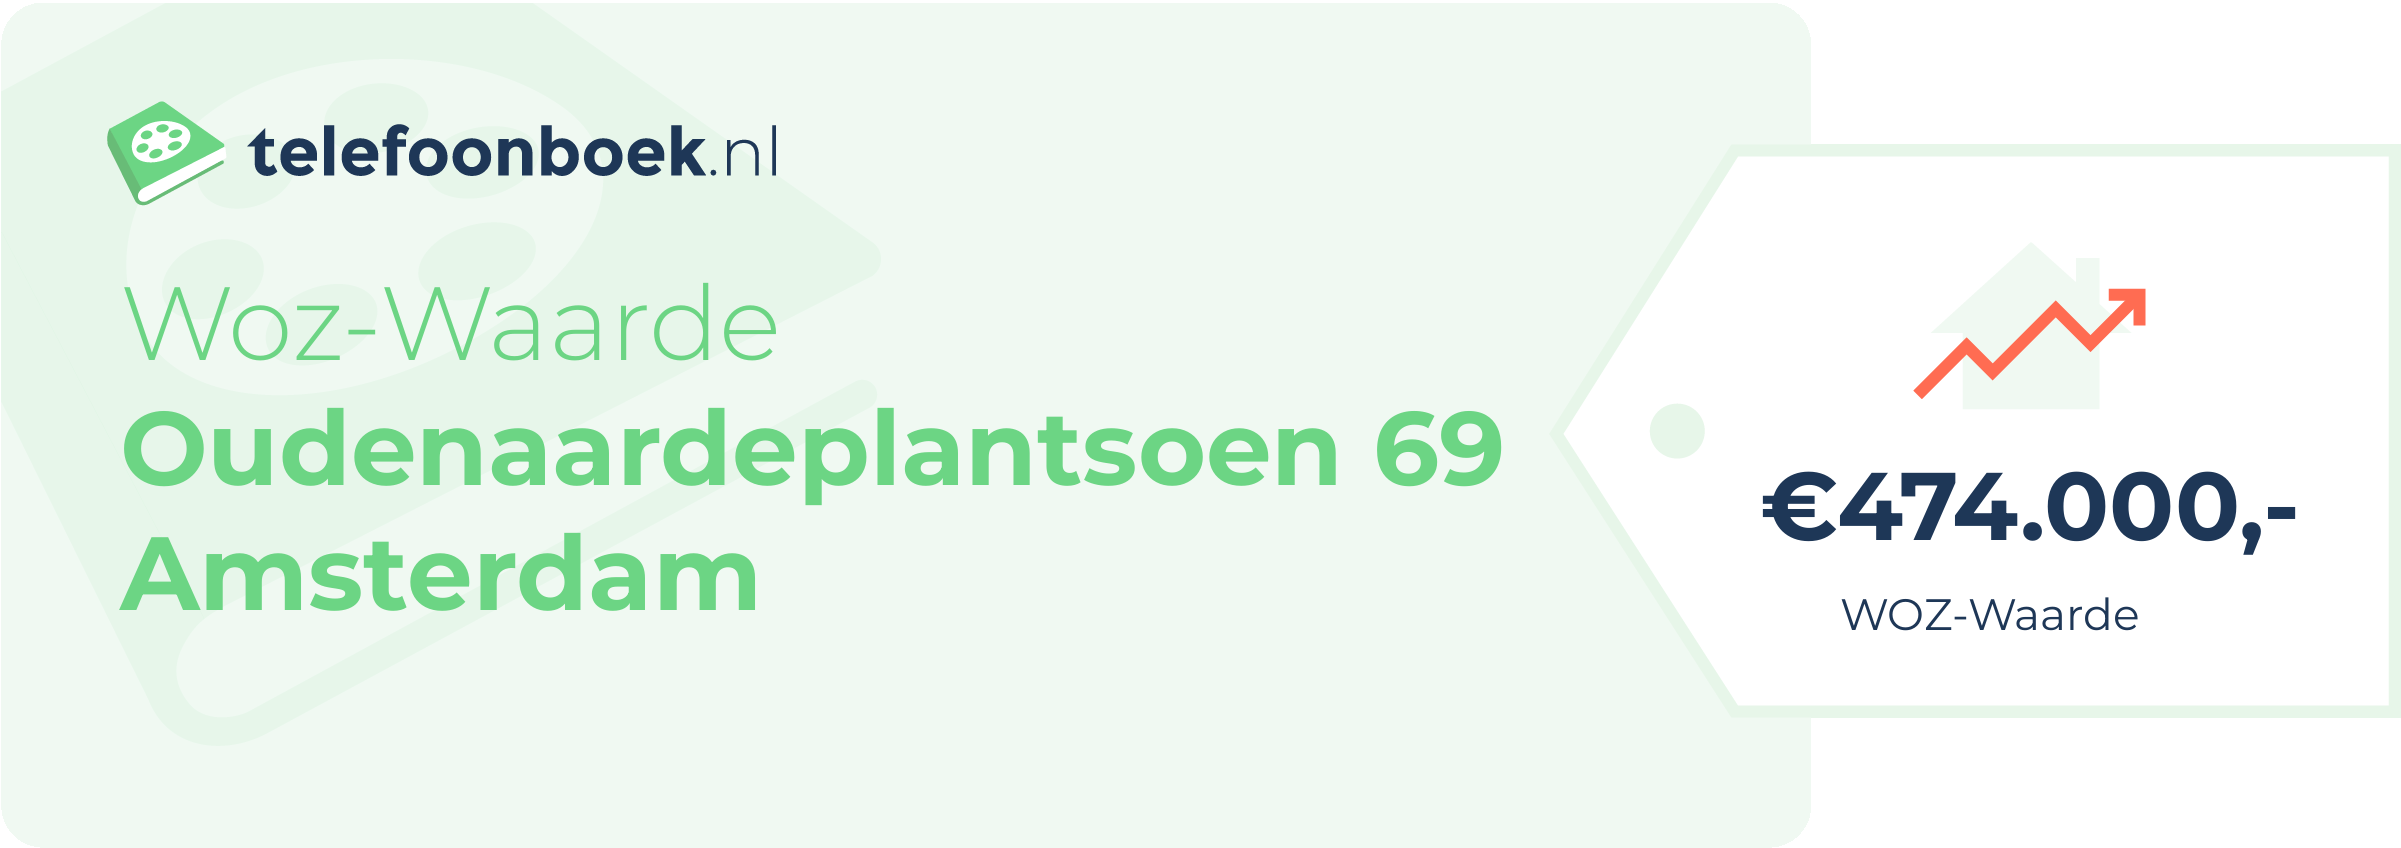 WOZ-waarde Oudenaardeplantsoen 69 Amsterdam